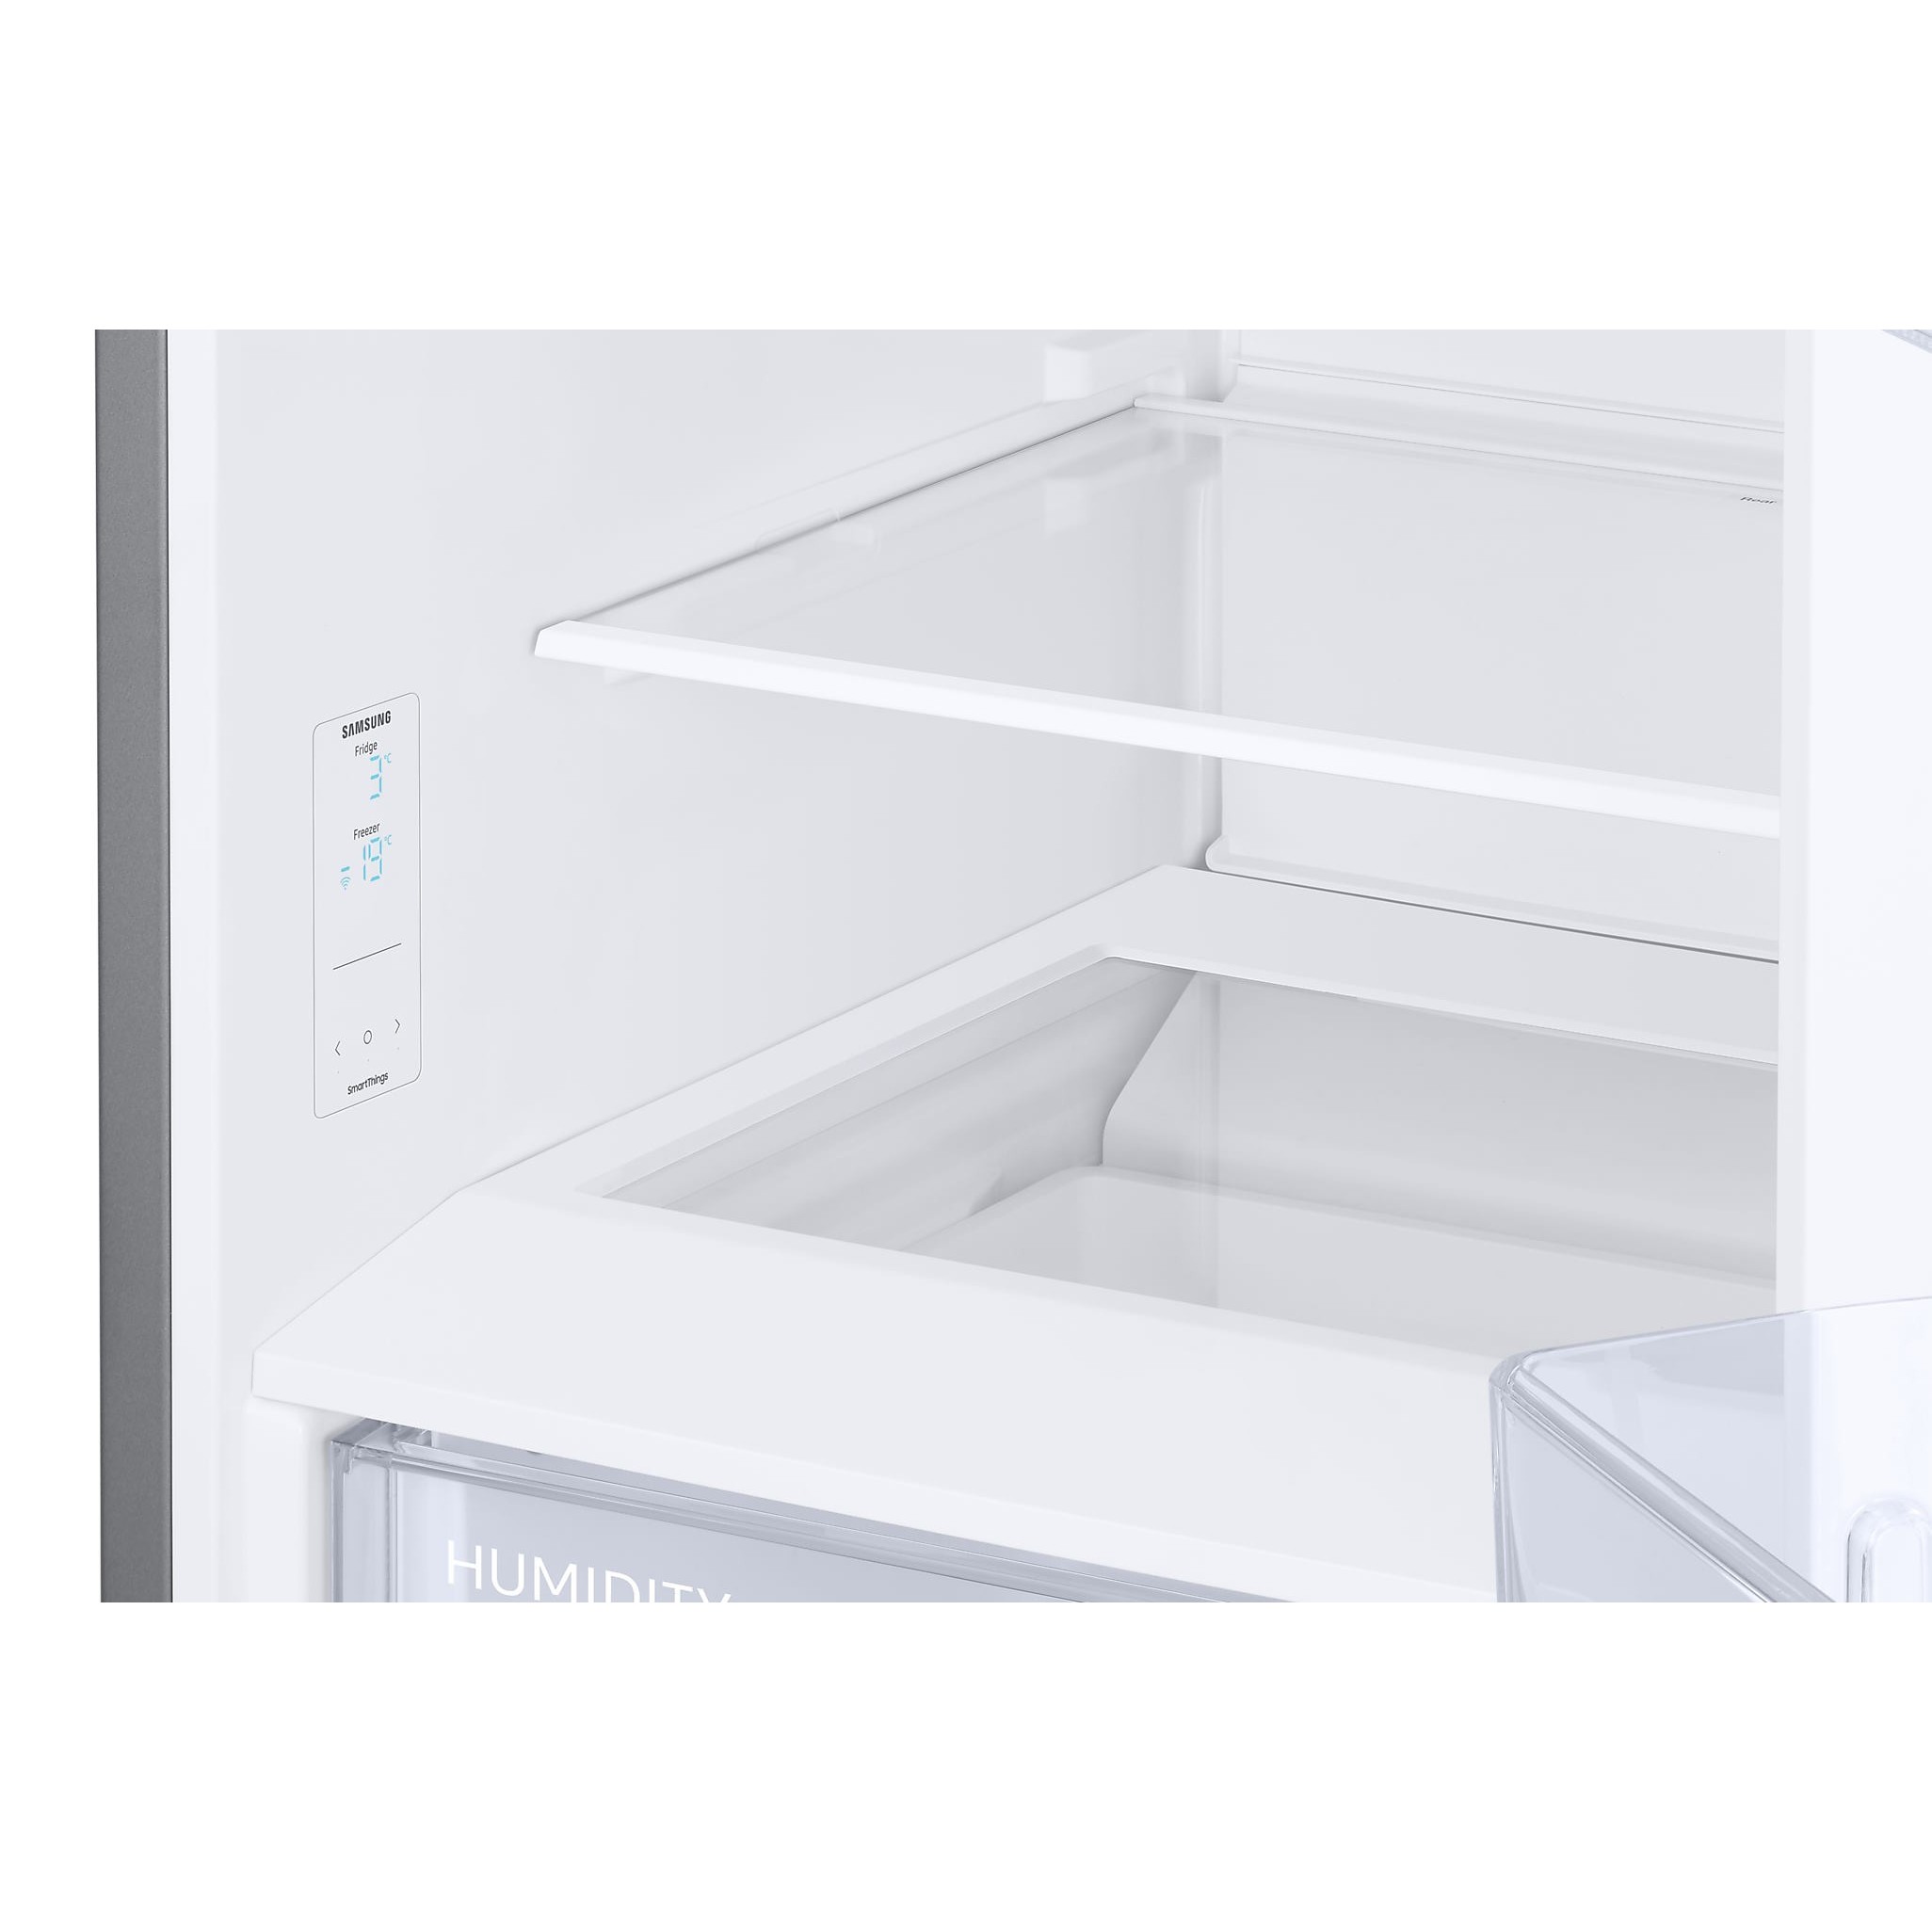 Холодильники Samsung Grand+ RB38C601DB1 графит